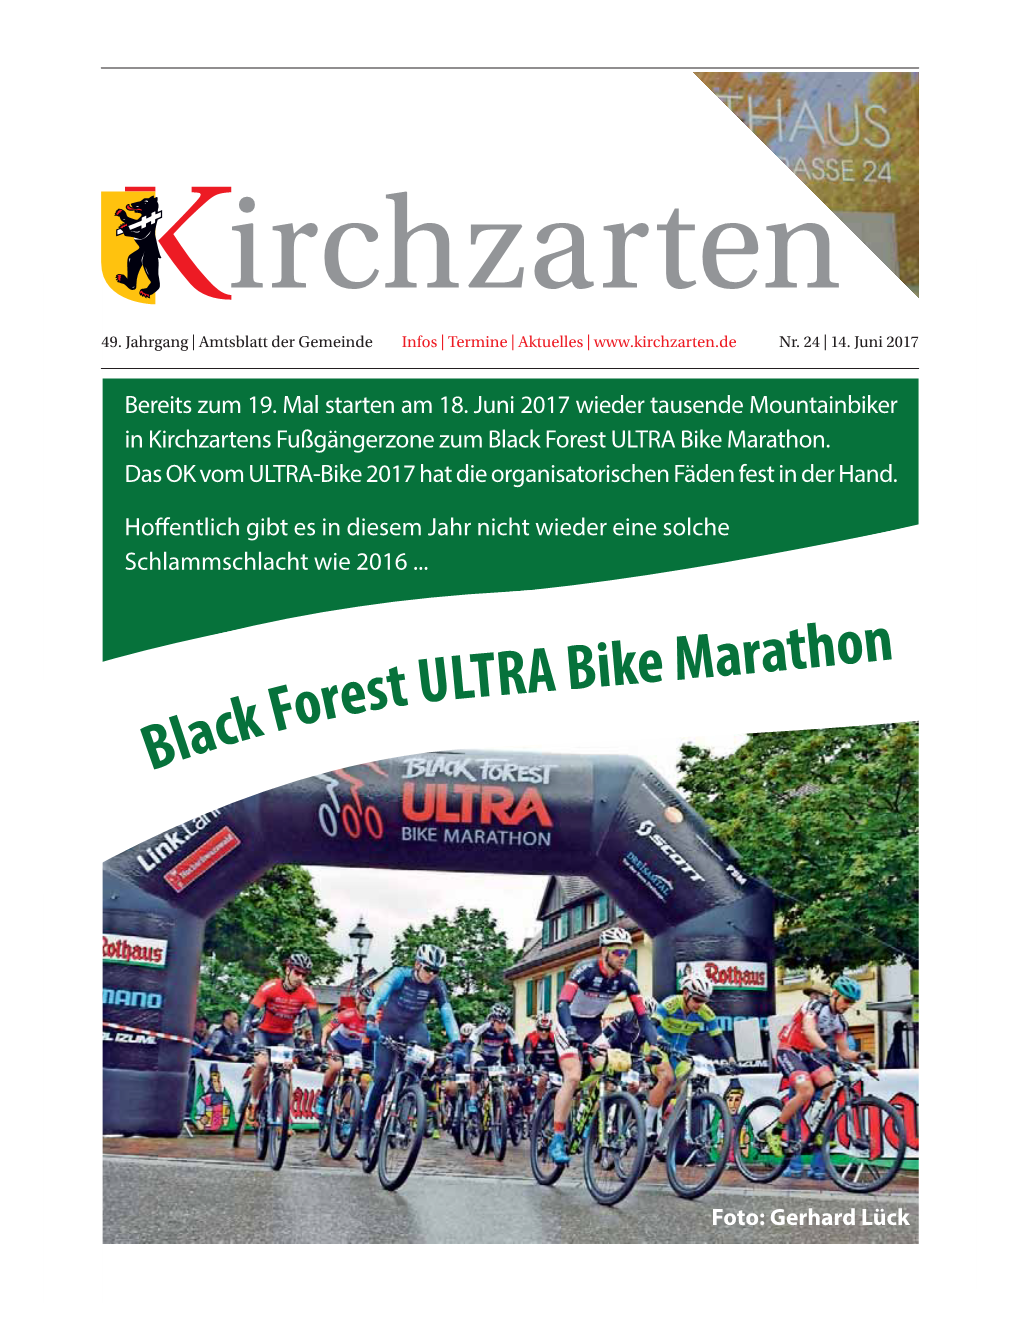 Black Forest ULTRA Bike Marathon